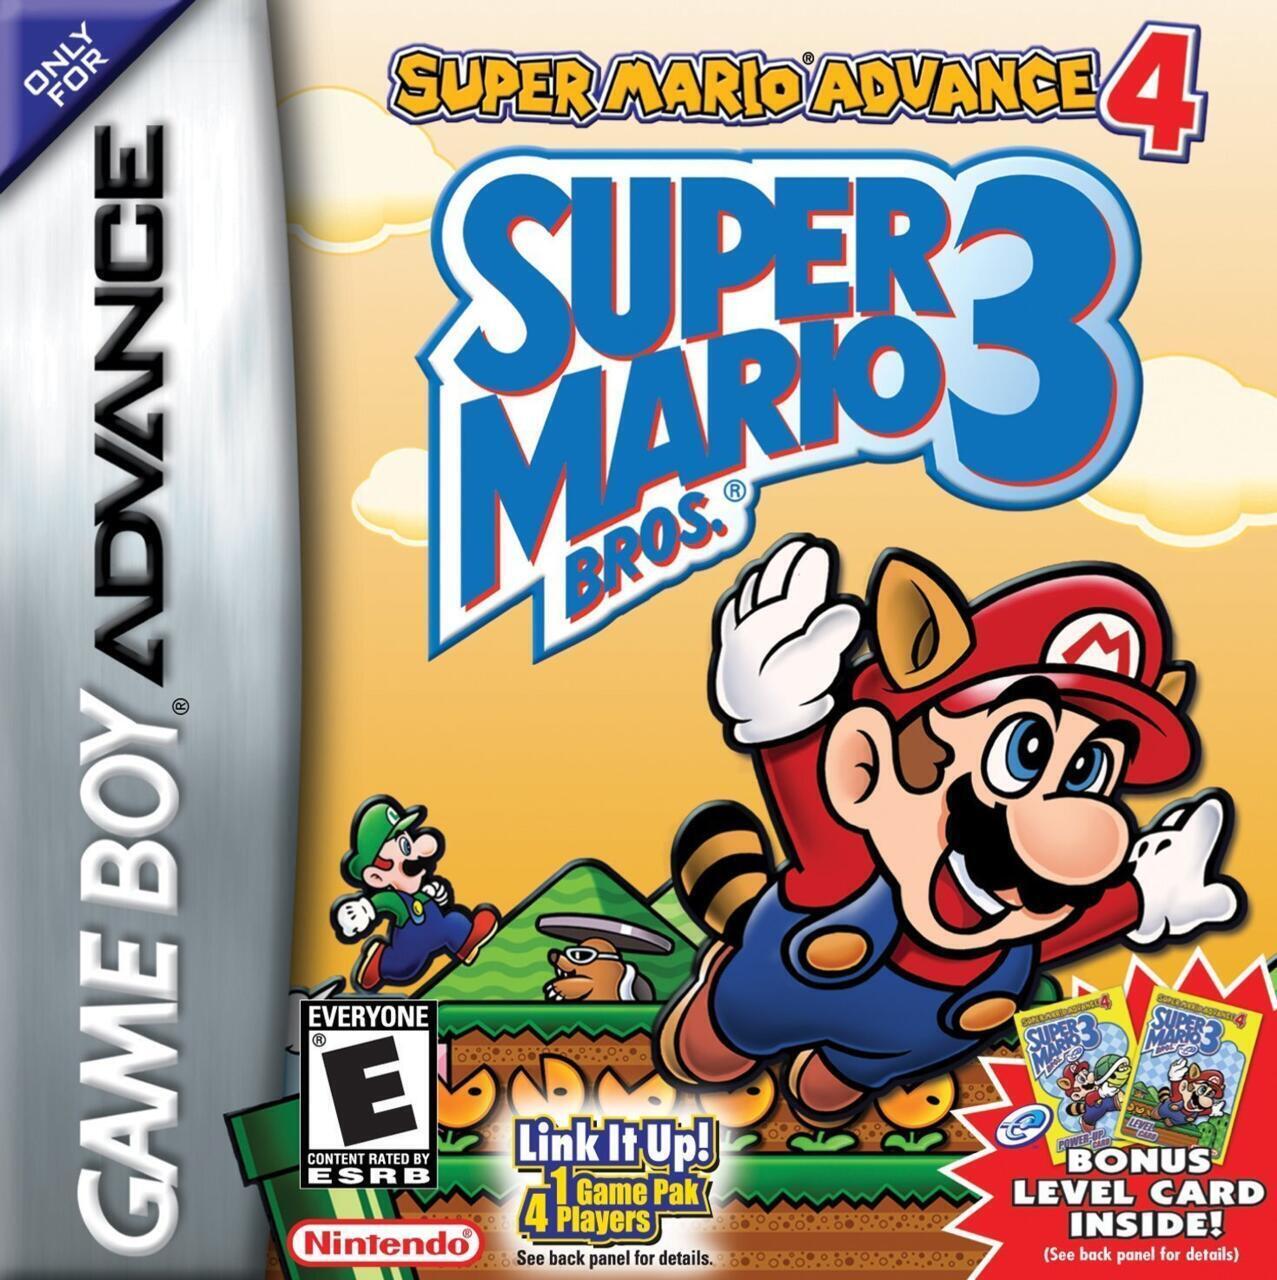 Super Mario Advance 4: Super Mario 3 (Wii U)